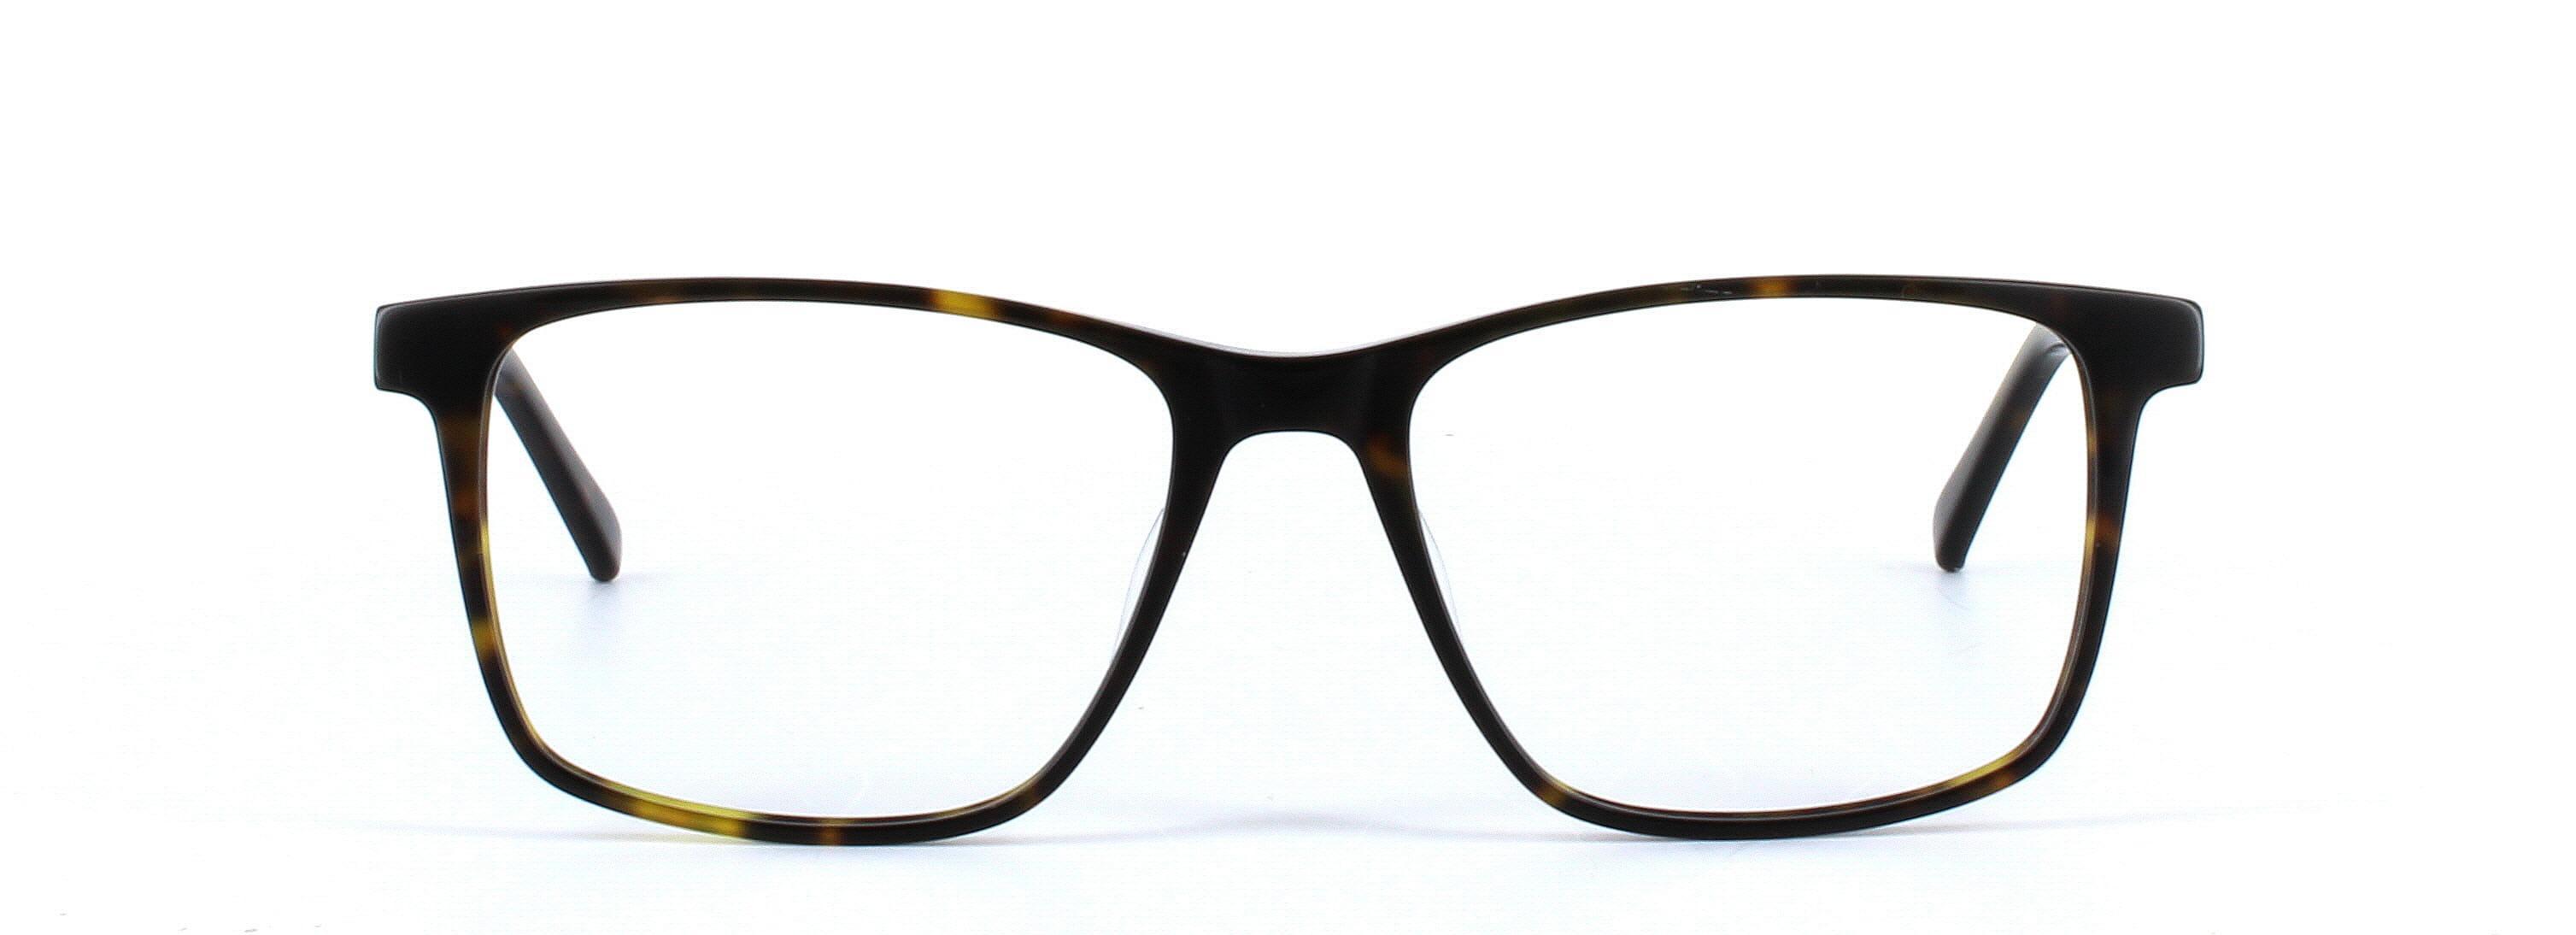 Bayley Lane Tortoise Full Rim Rectangular Acetate Glasses - Image View 5